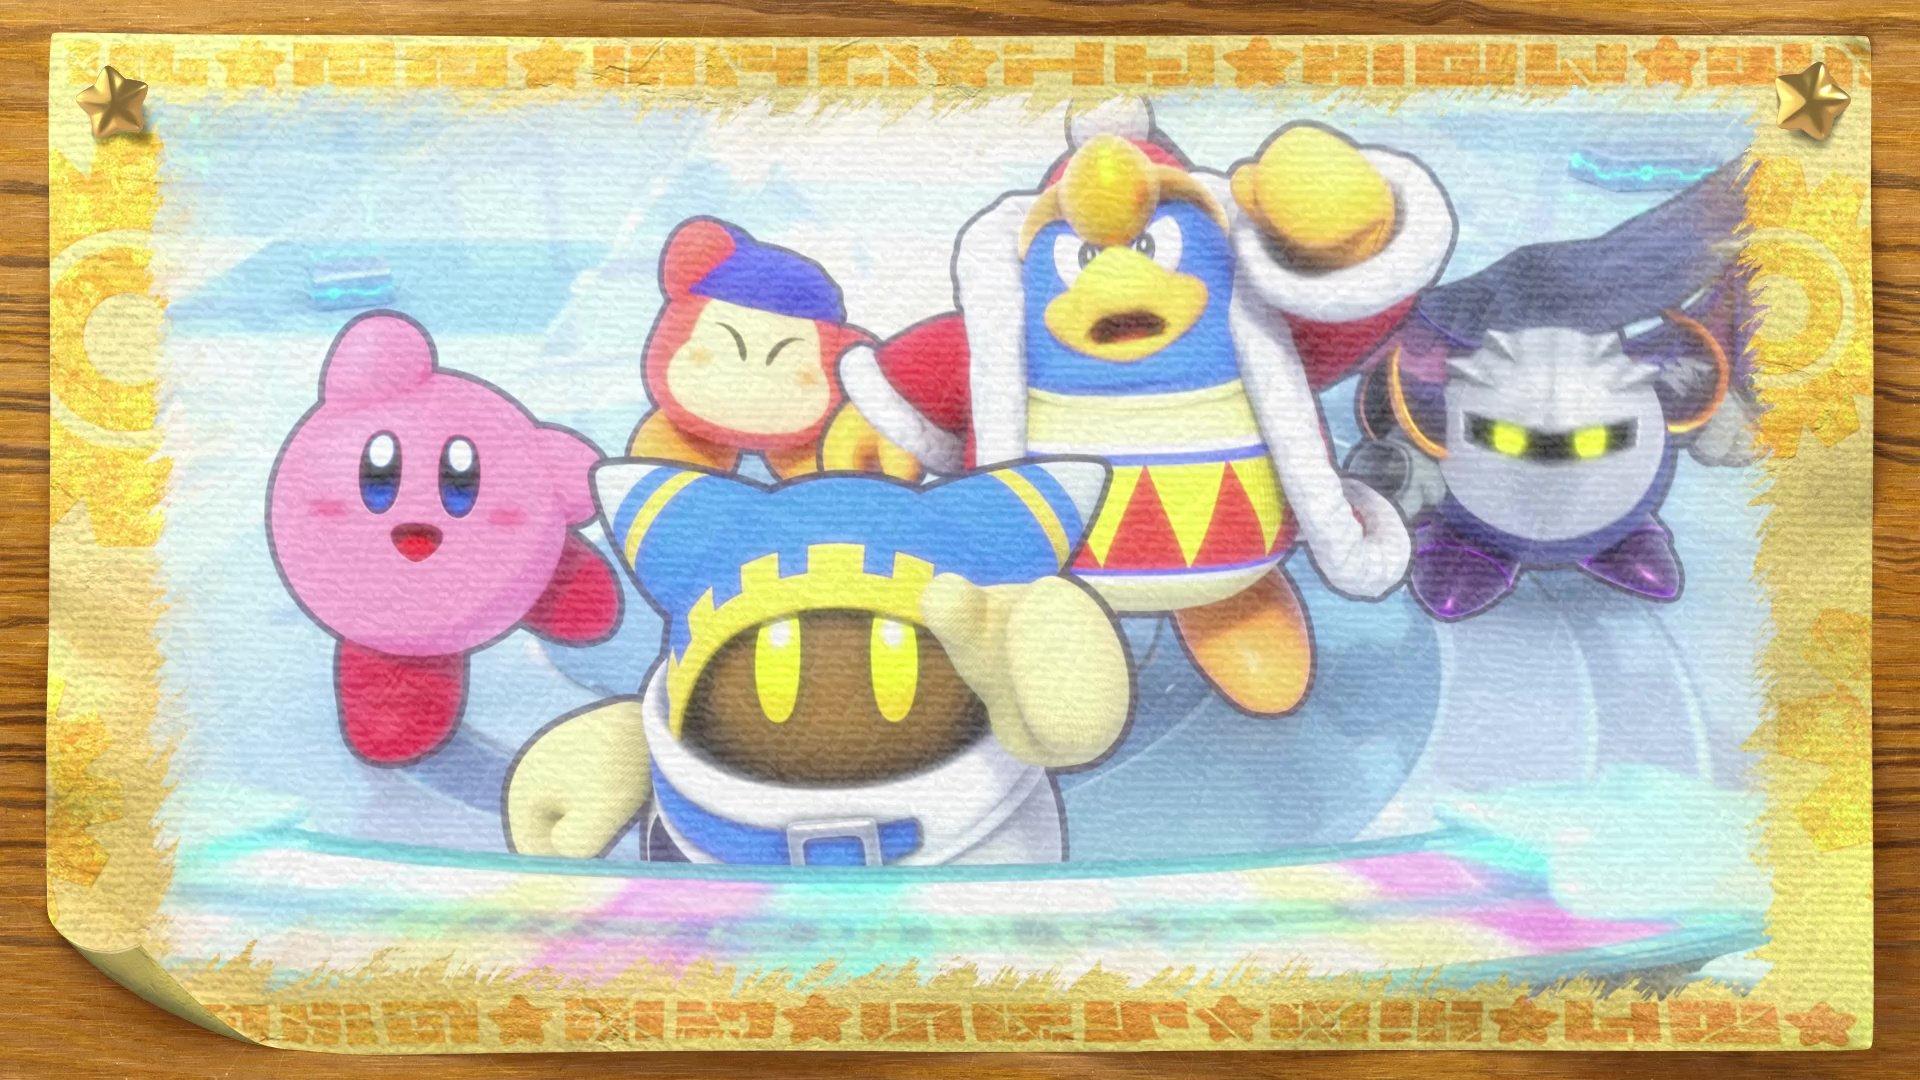 Nintendo Kirby's Return to Dream Land Deluxe - Nintendo Switch